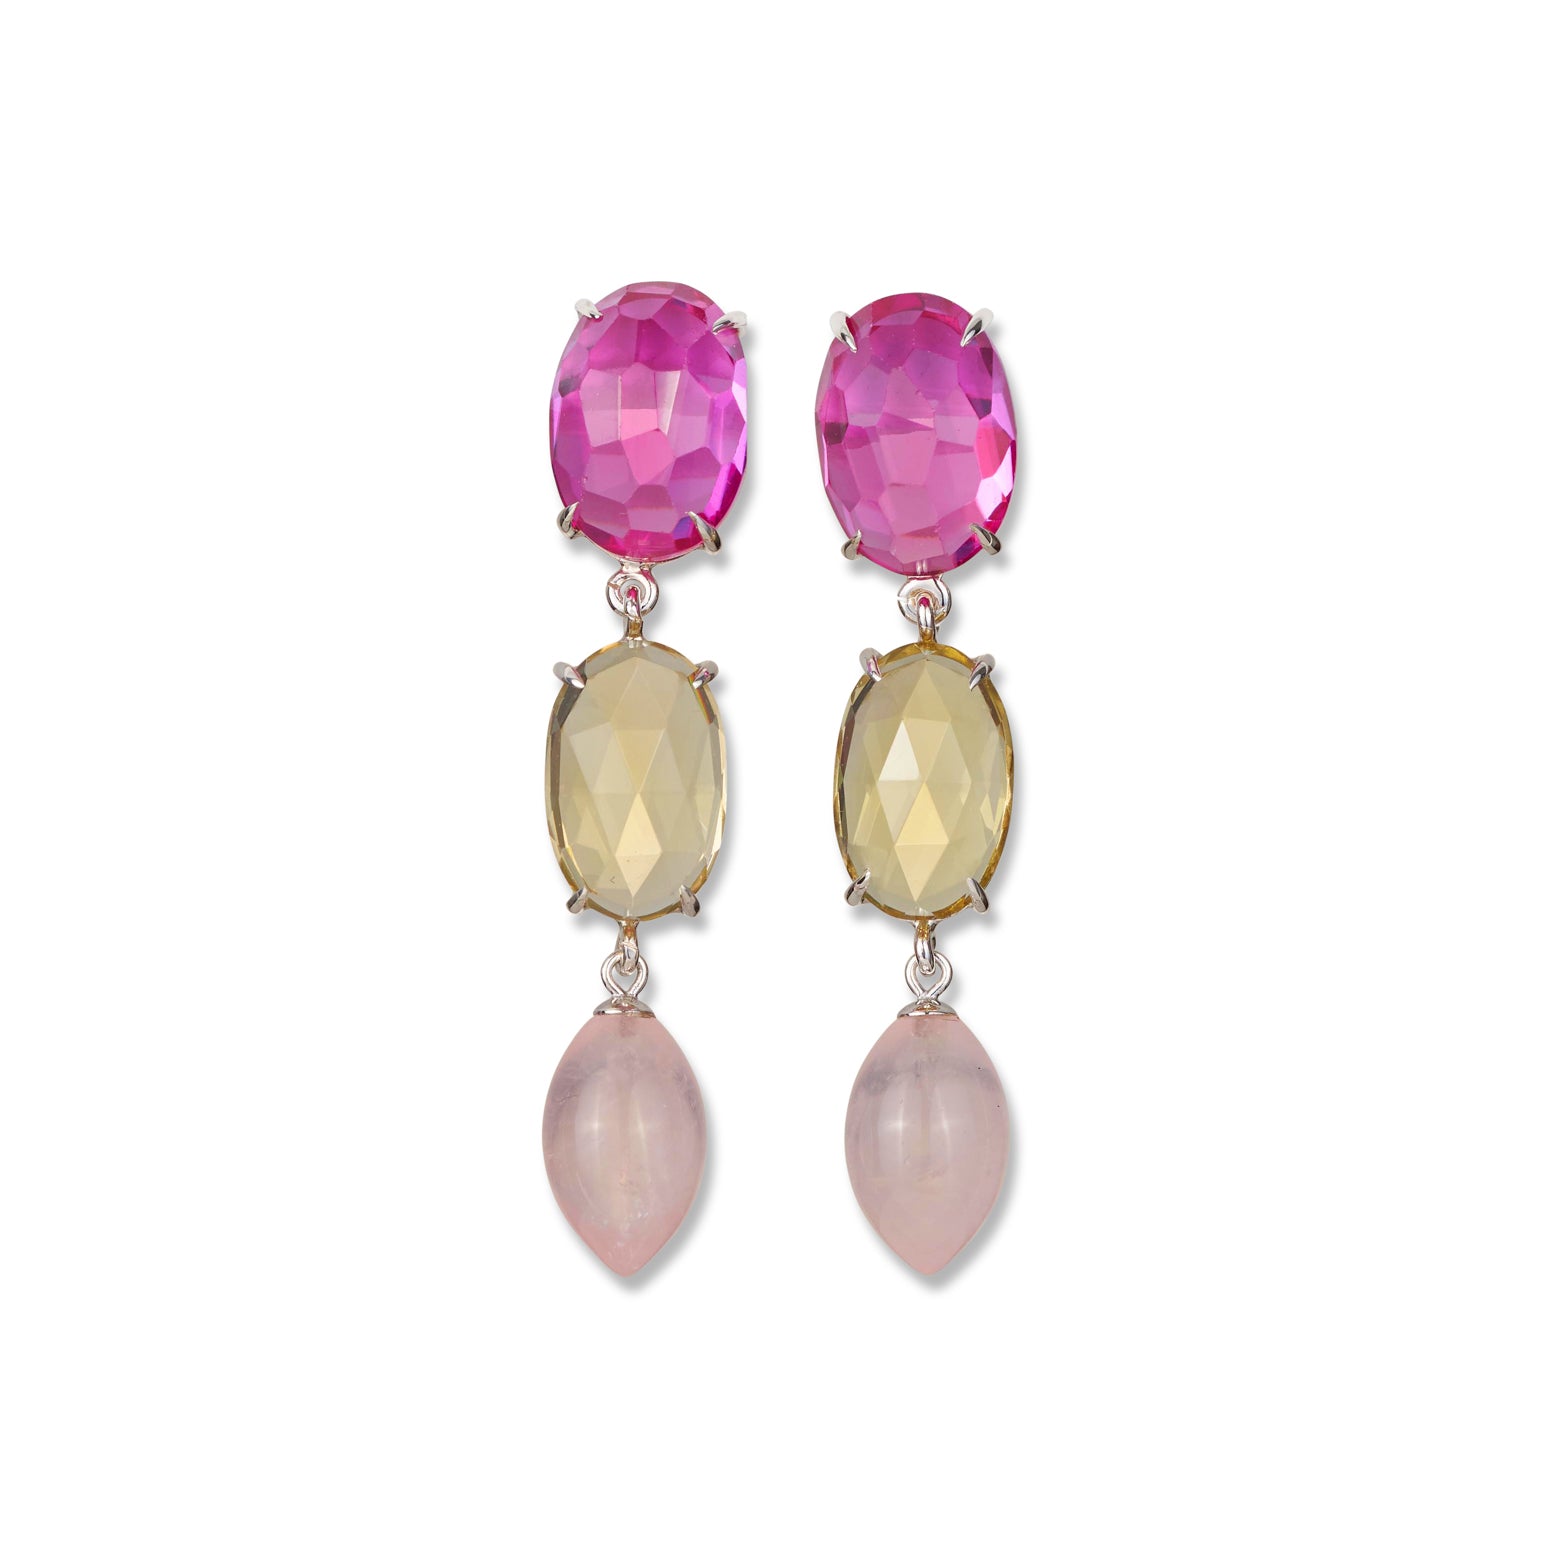 Kelly Woodcroft Brisbane jeweller Mermaid earrings with lemon quartz and rose quartz stone dangles set in gold.